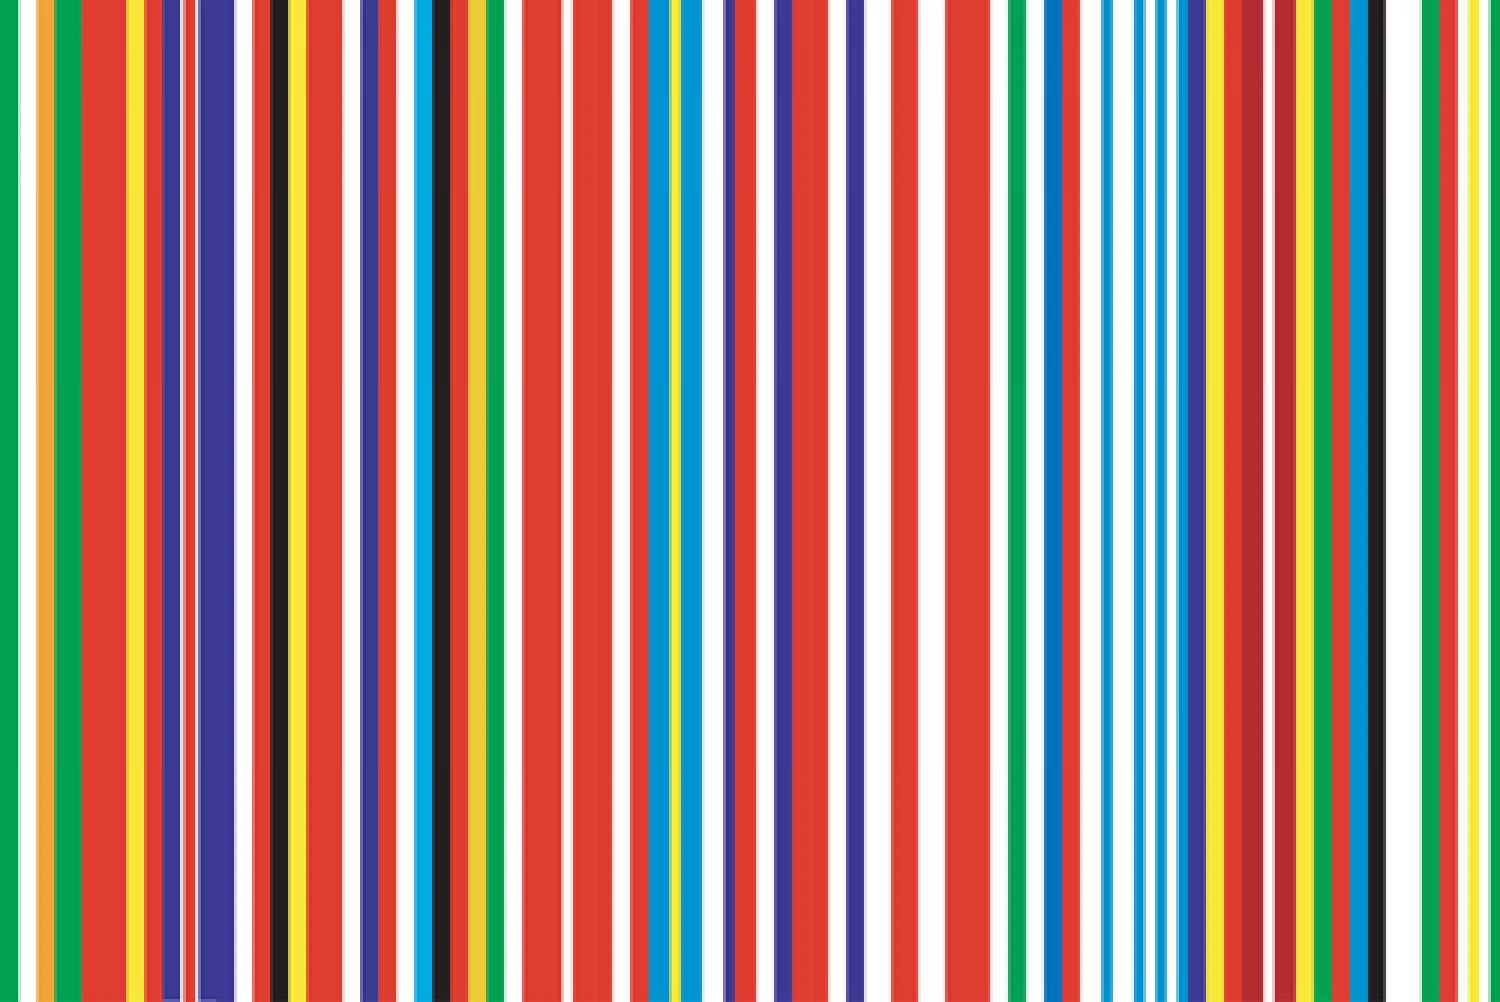 EU flag proposed by Rem Koolhaas